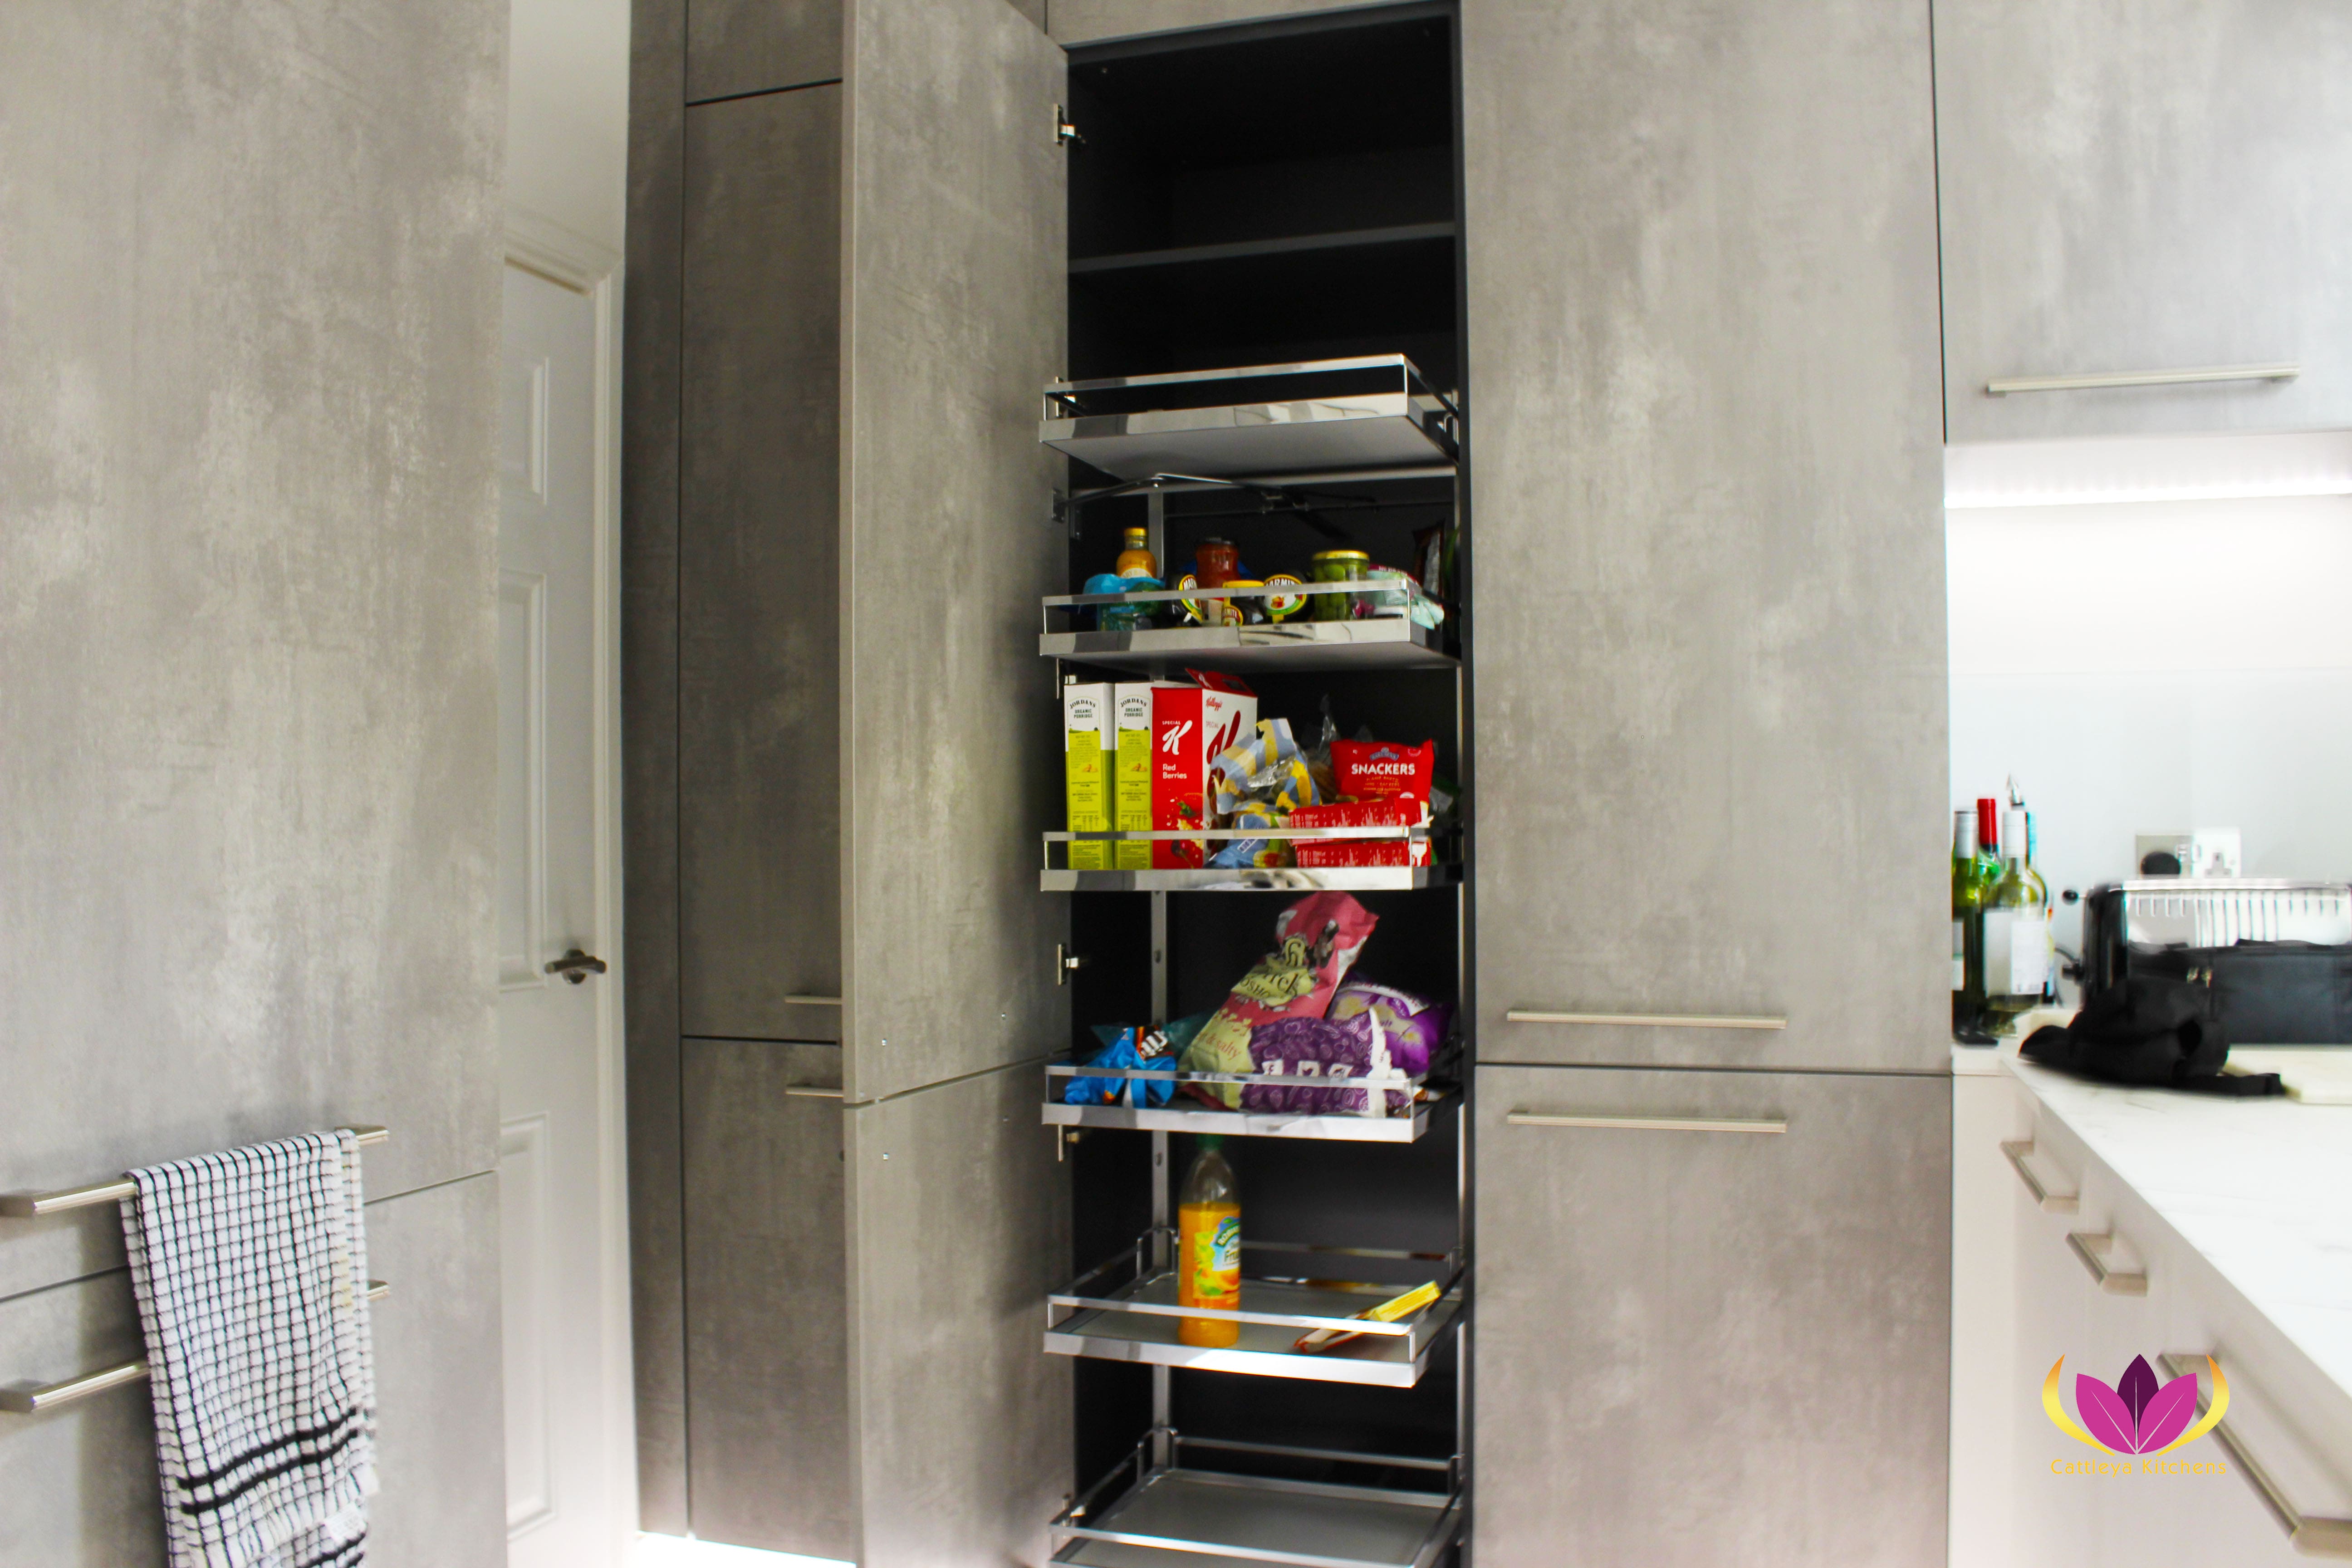 Sliding metal fittings inside tall cabinet unit - Belsize Park Finished Kitchen Project